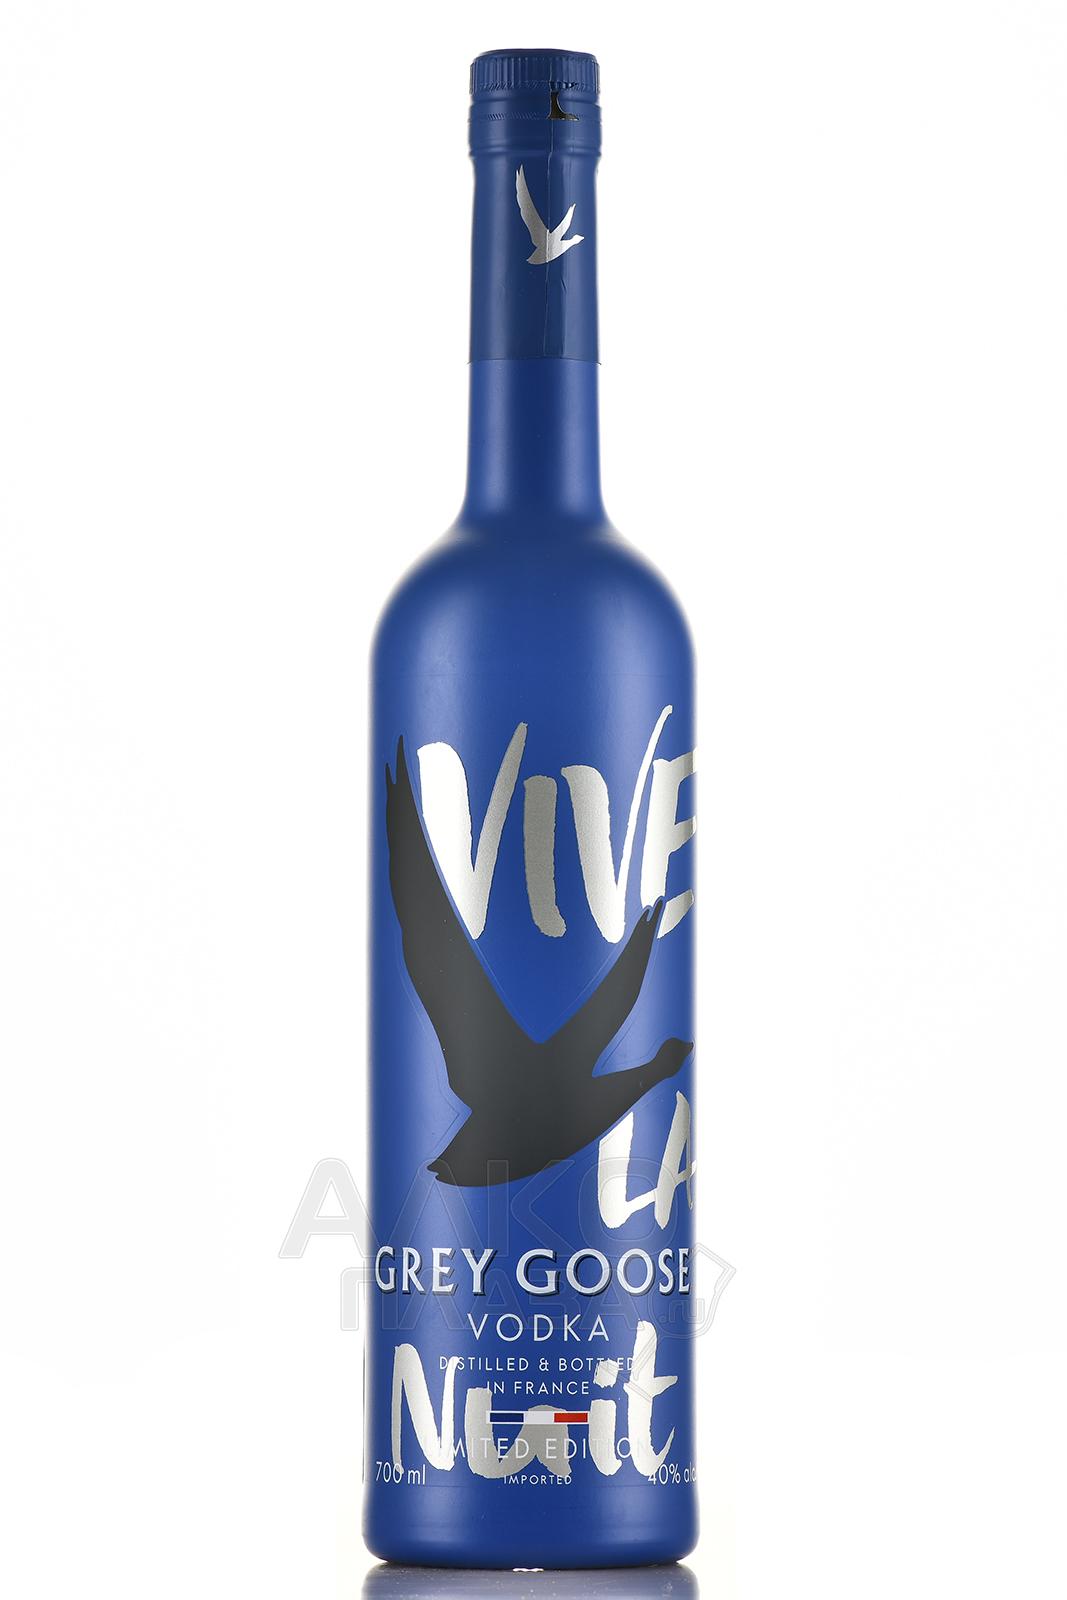 Grey Goose Vive La Nuit - водка Грей Гуз Виве Ла Нюит 0.7 л